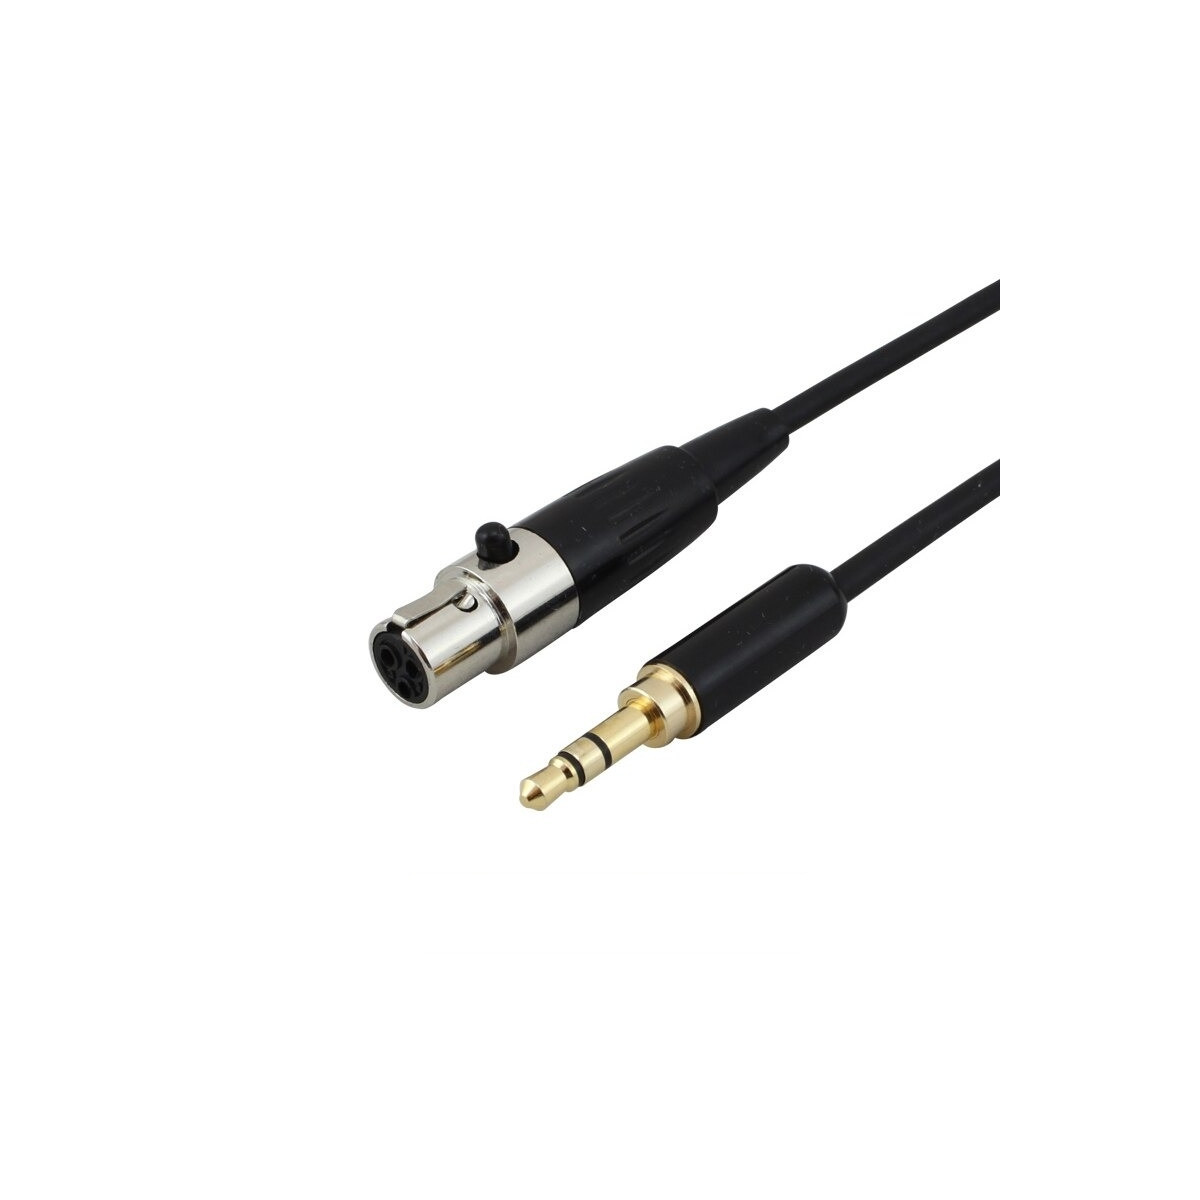 Câble Jack 3.5 Stéréo Mâle vers Mini XLR Femelle 3m